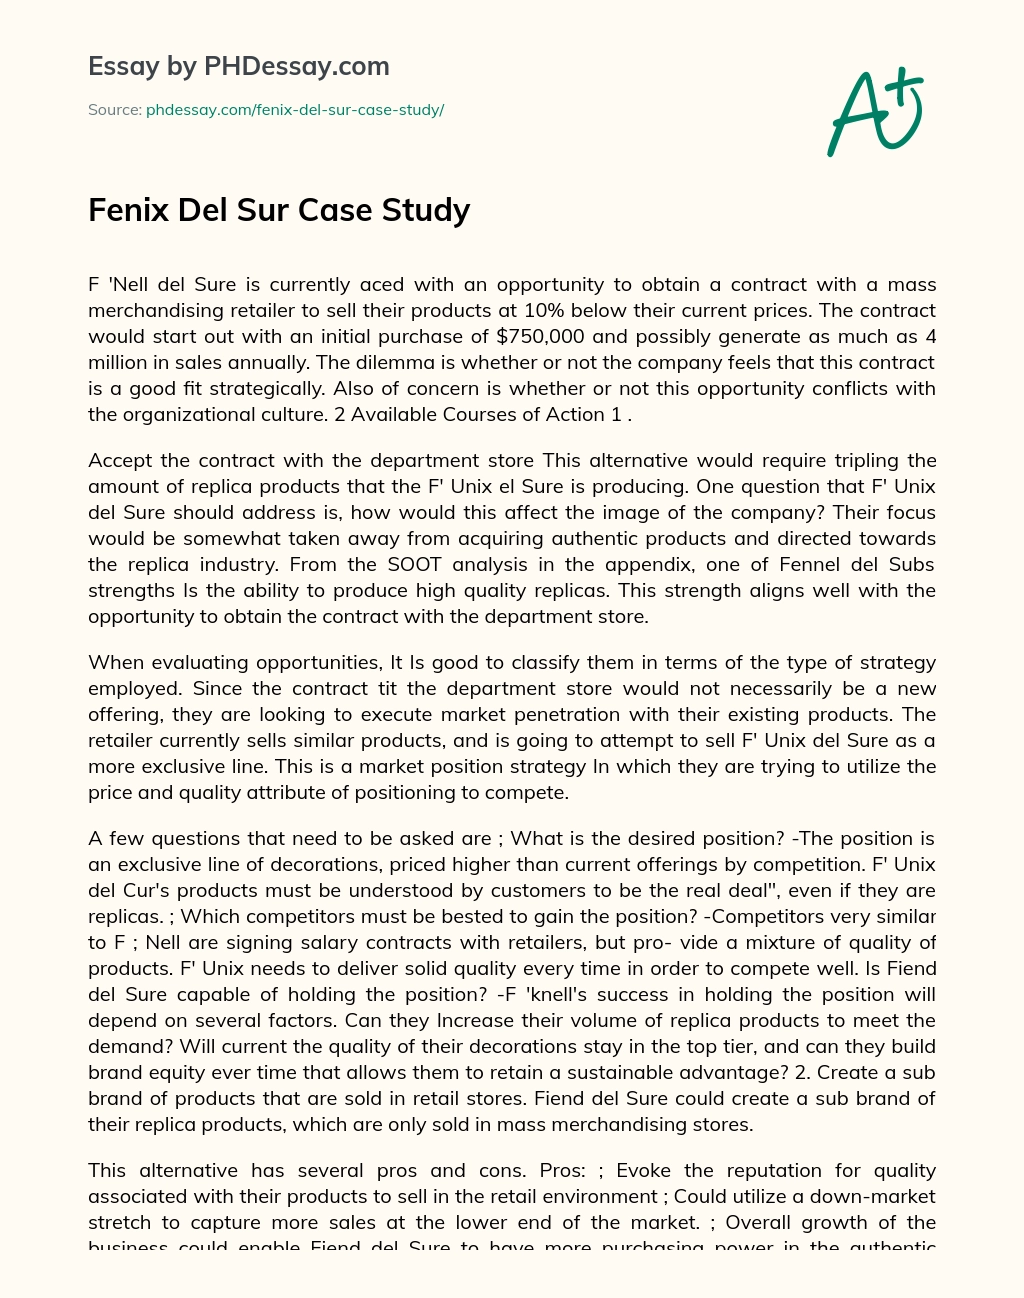 Fenix Del Sur Case Study essay